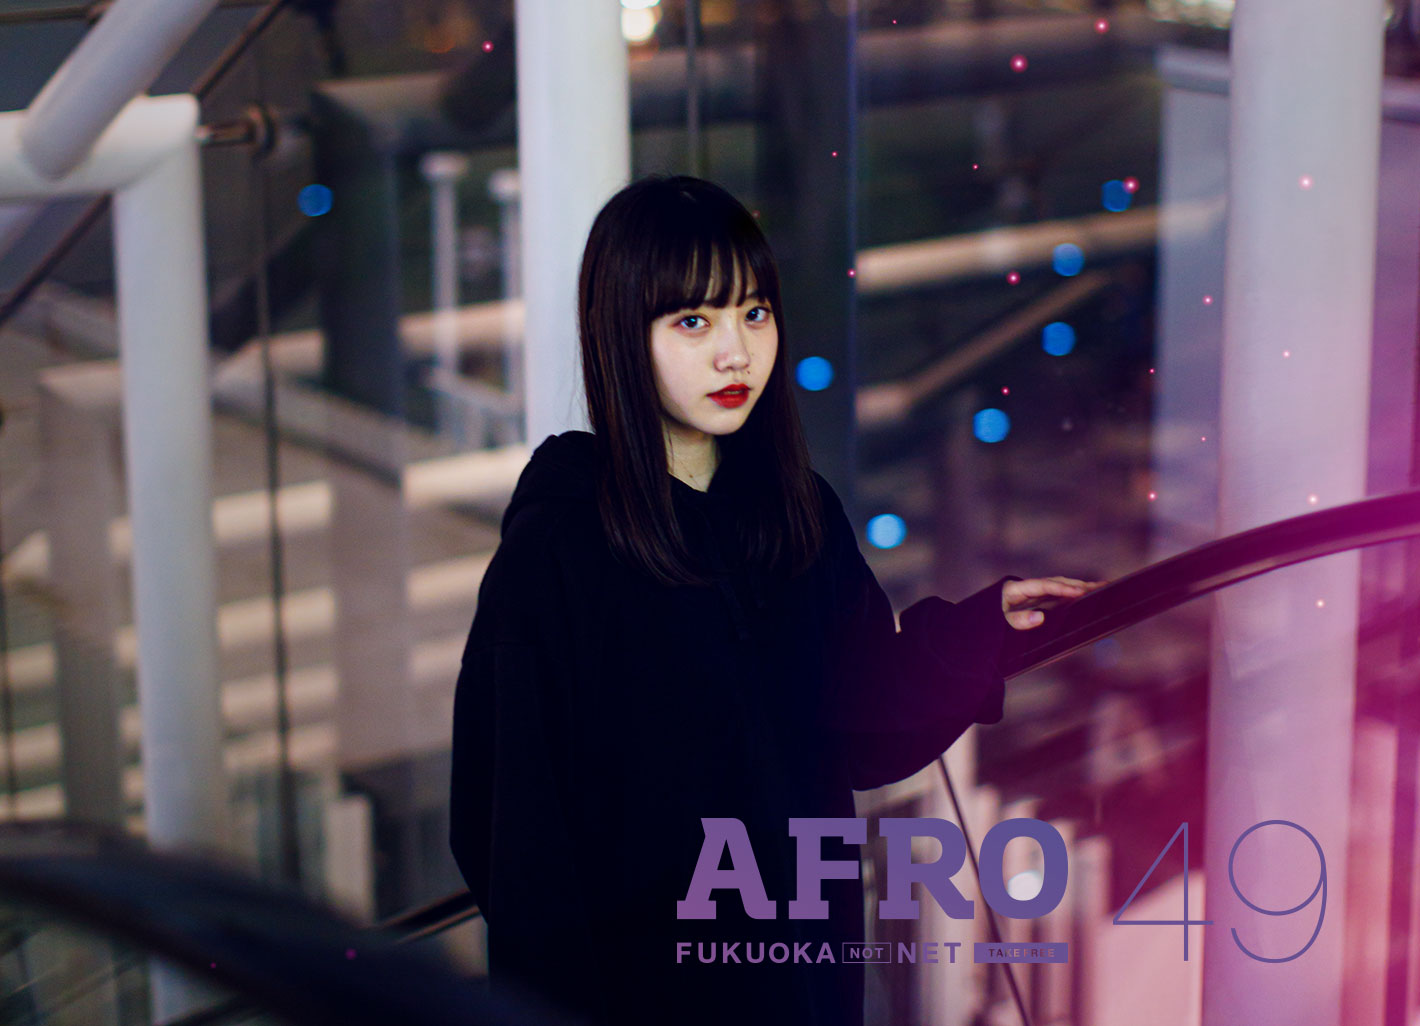 AFRO FUKUOKA [NOT] NET vol49